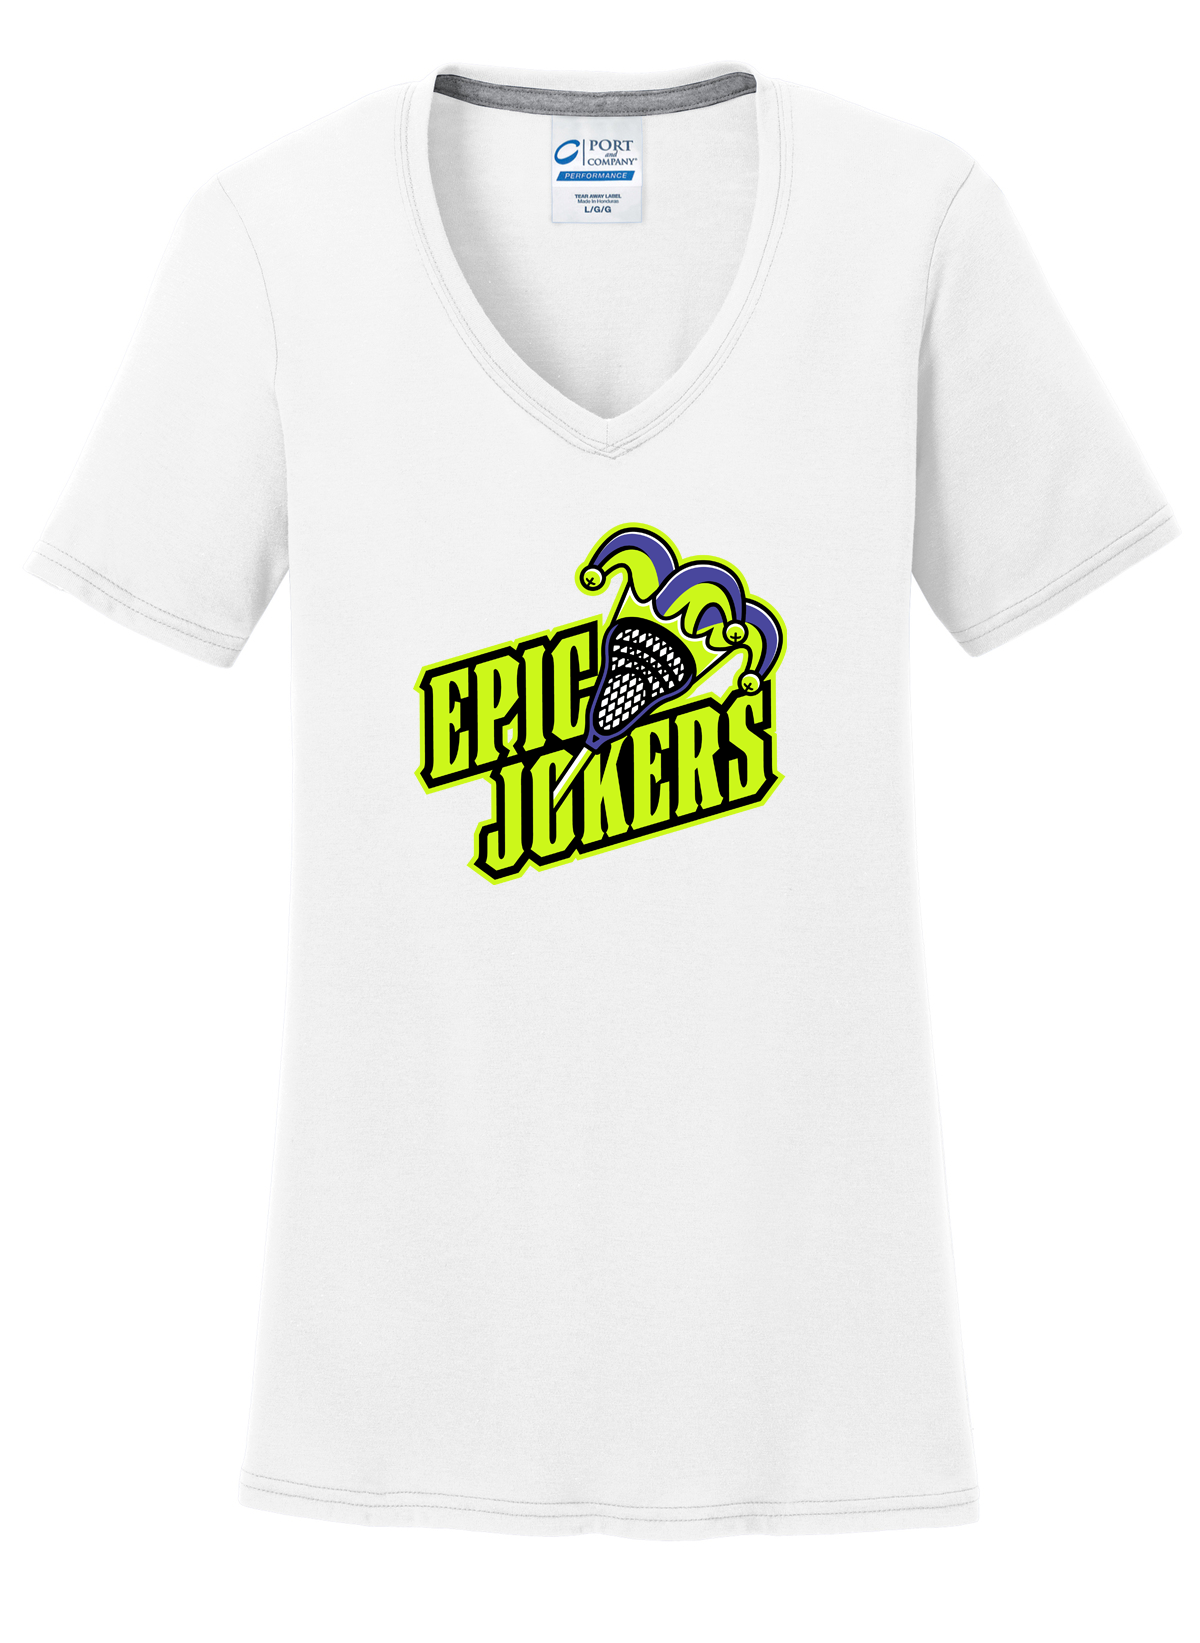 Epic Jokers Lacrosse Women's White T-Shirt